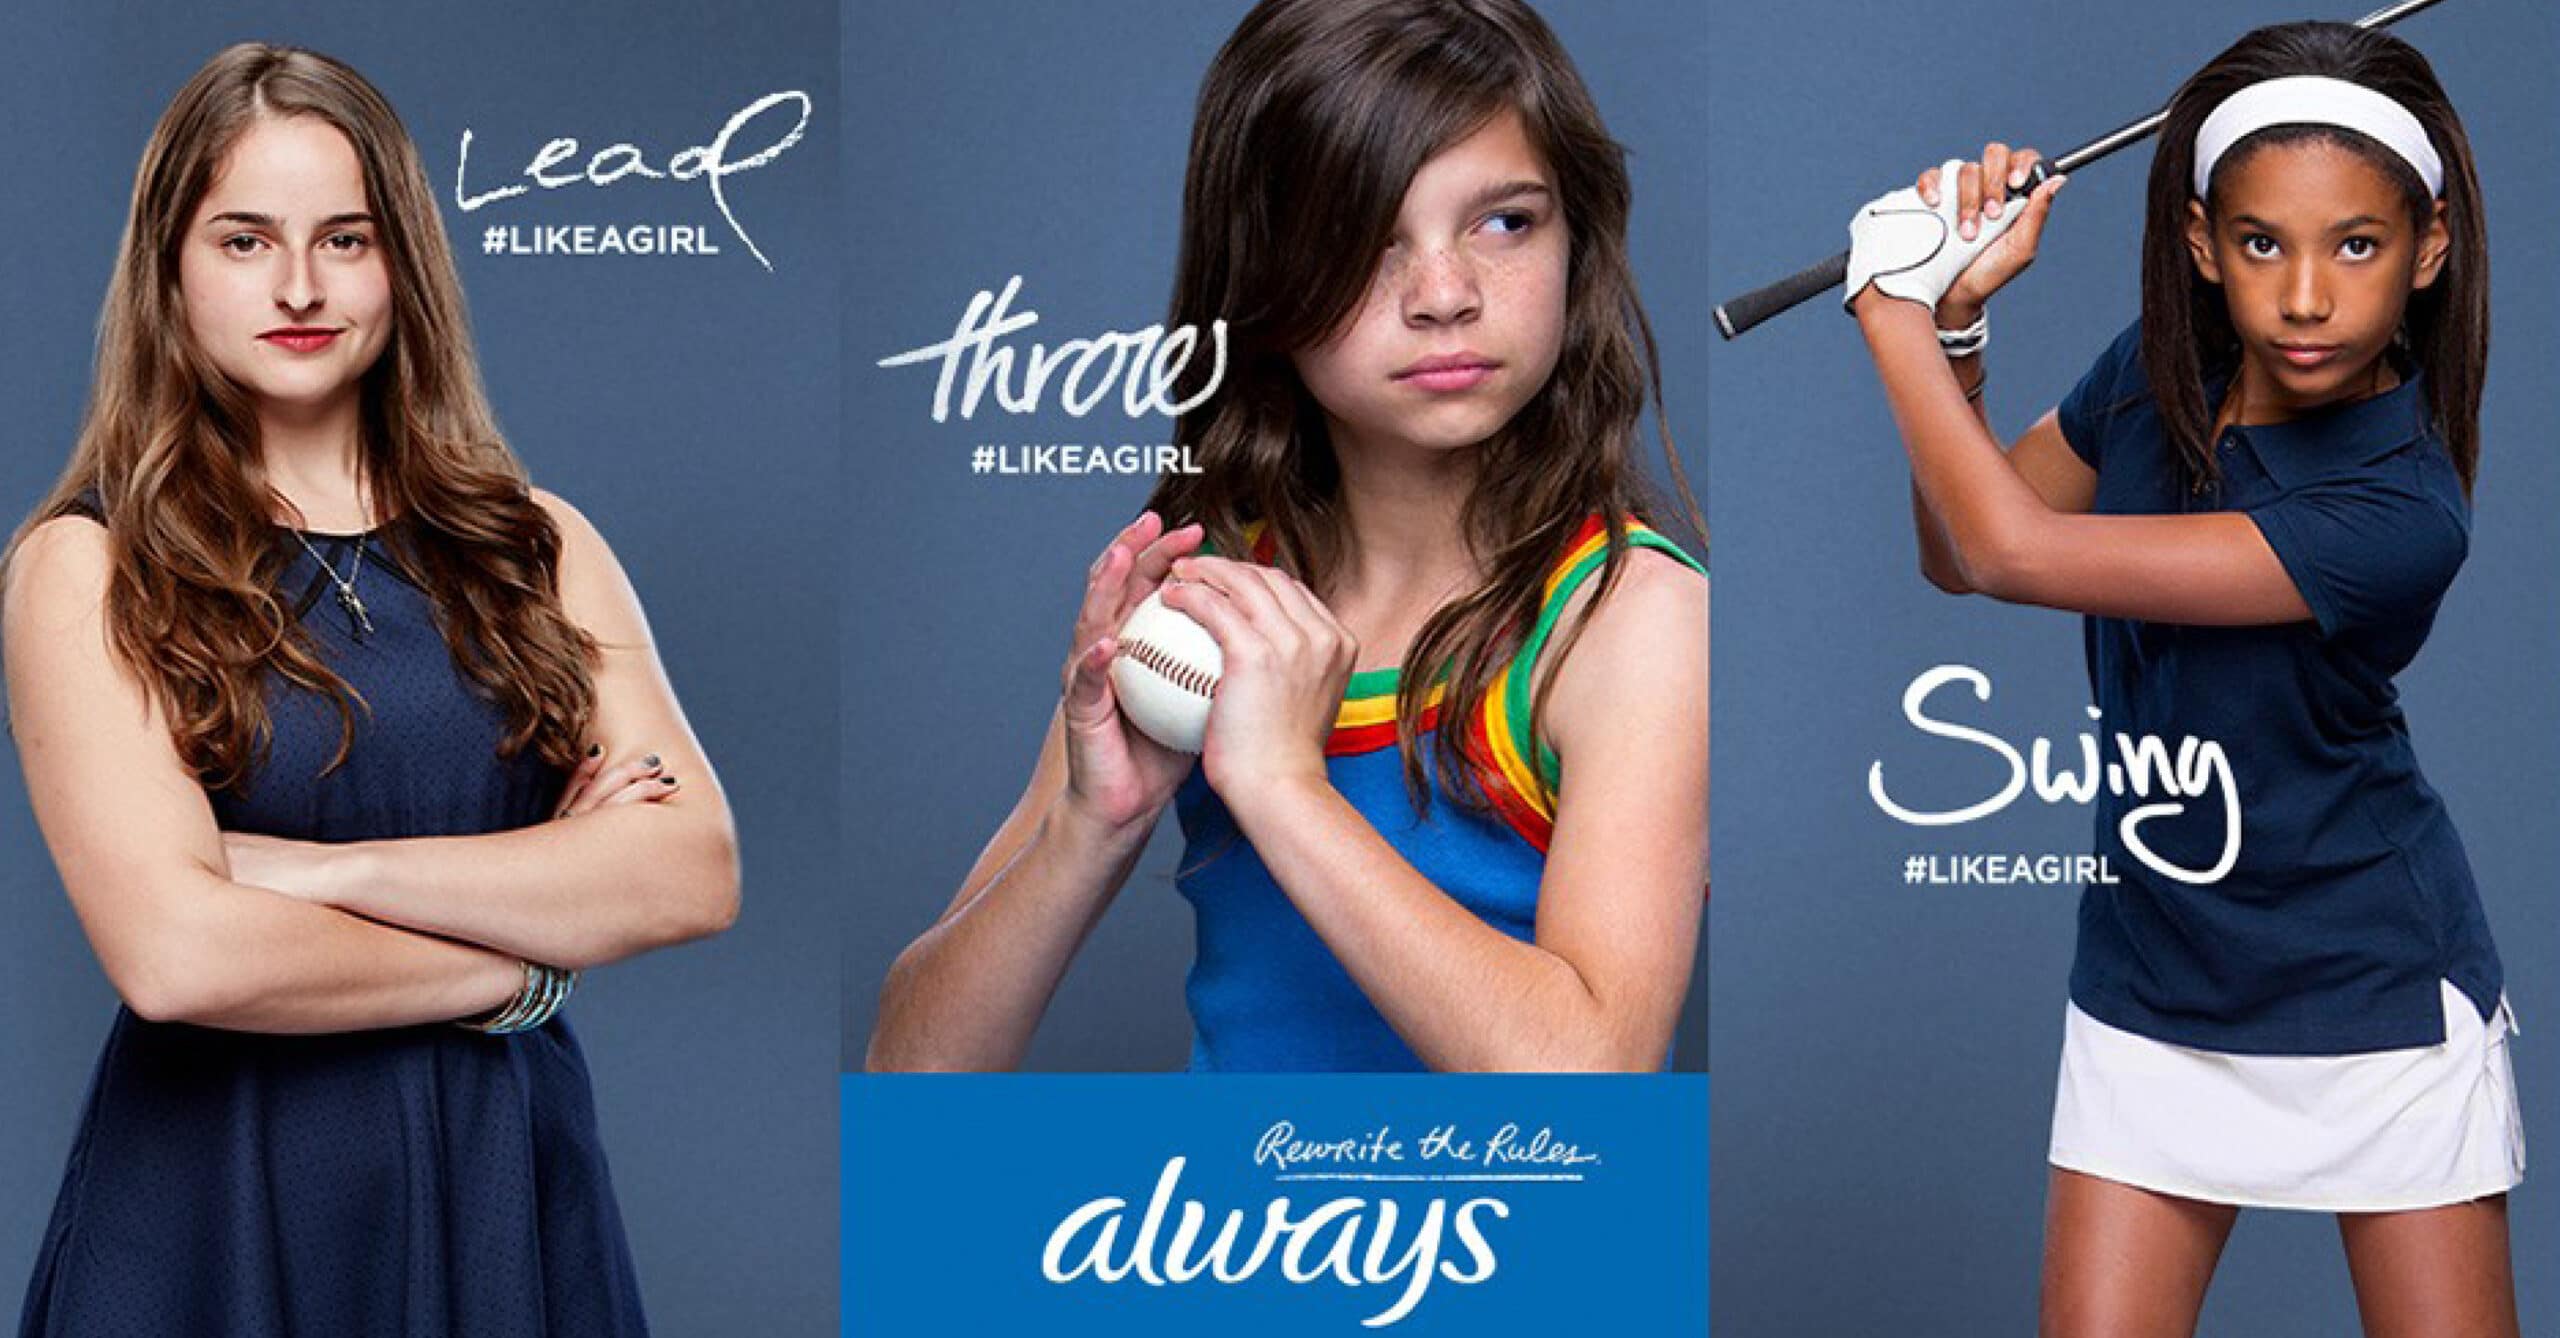 Лайк гоу. Реклама Олвейс. Always реклама. Реклама always like a girl. Always #LIKEAGIRL.